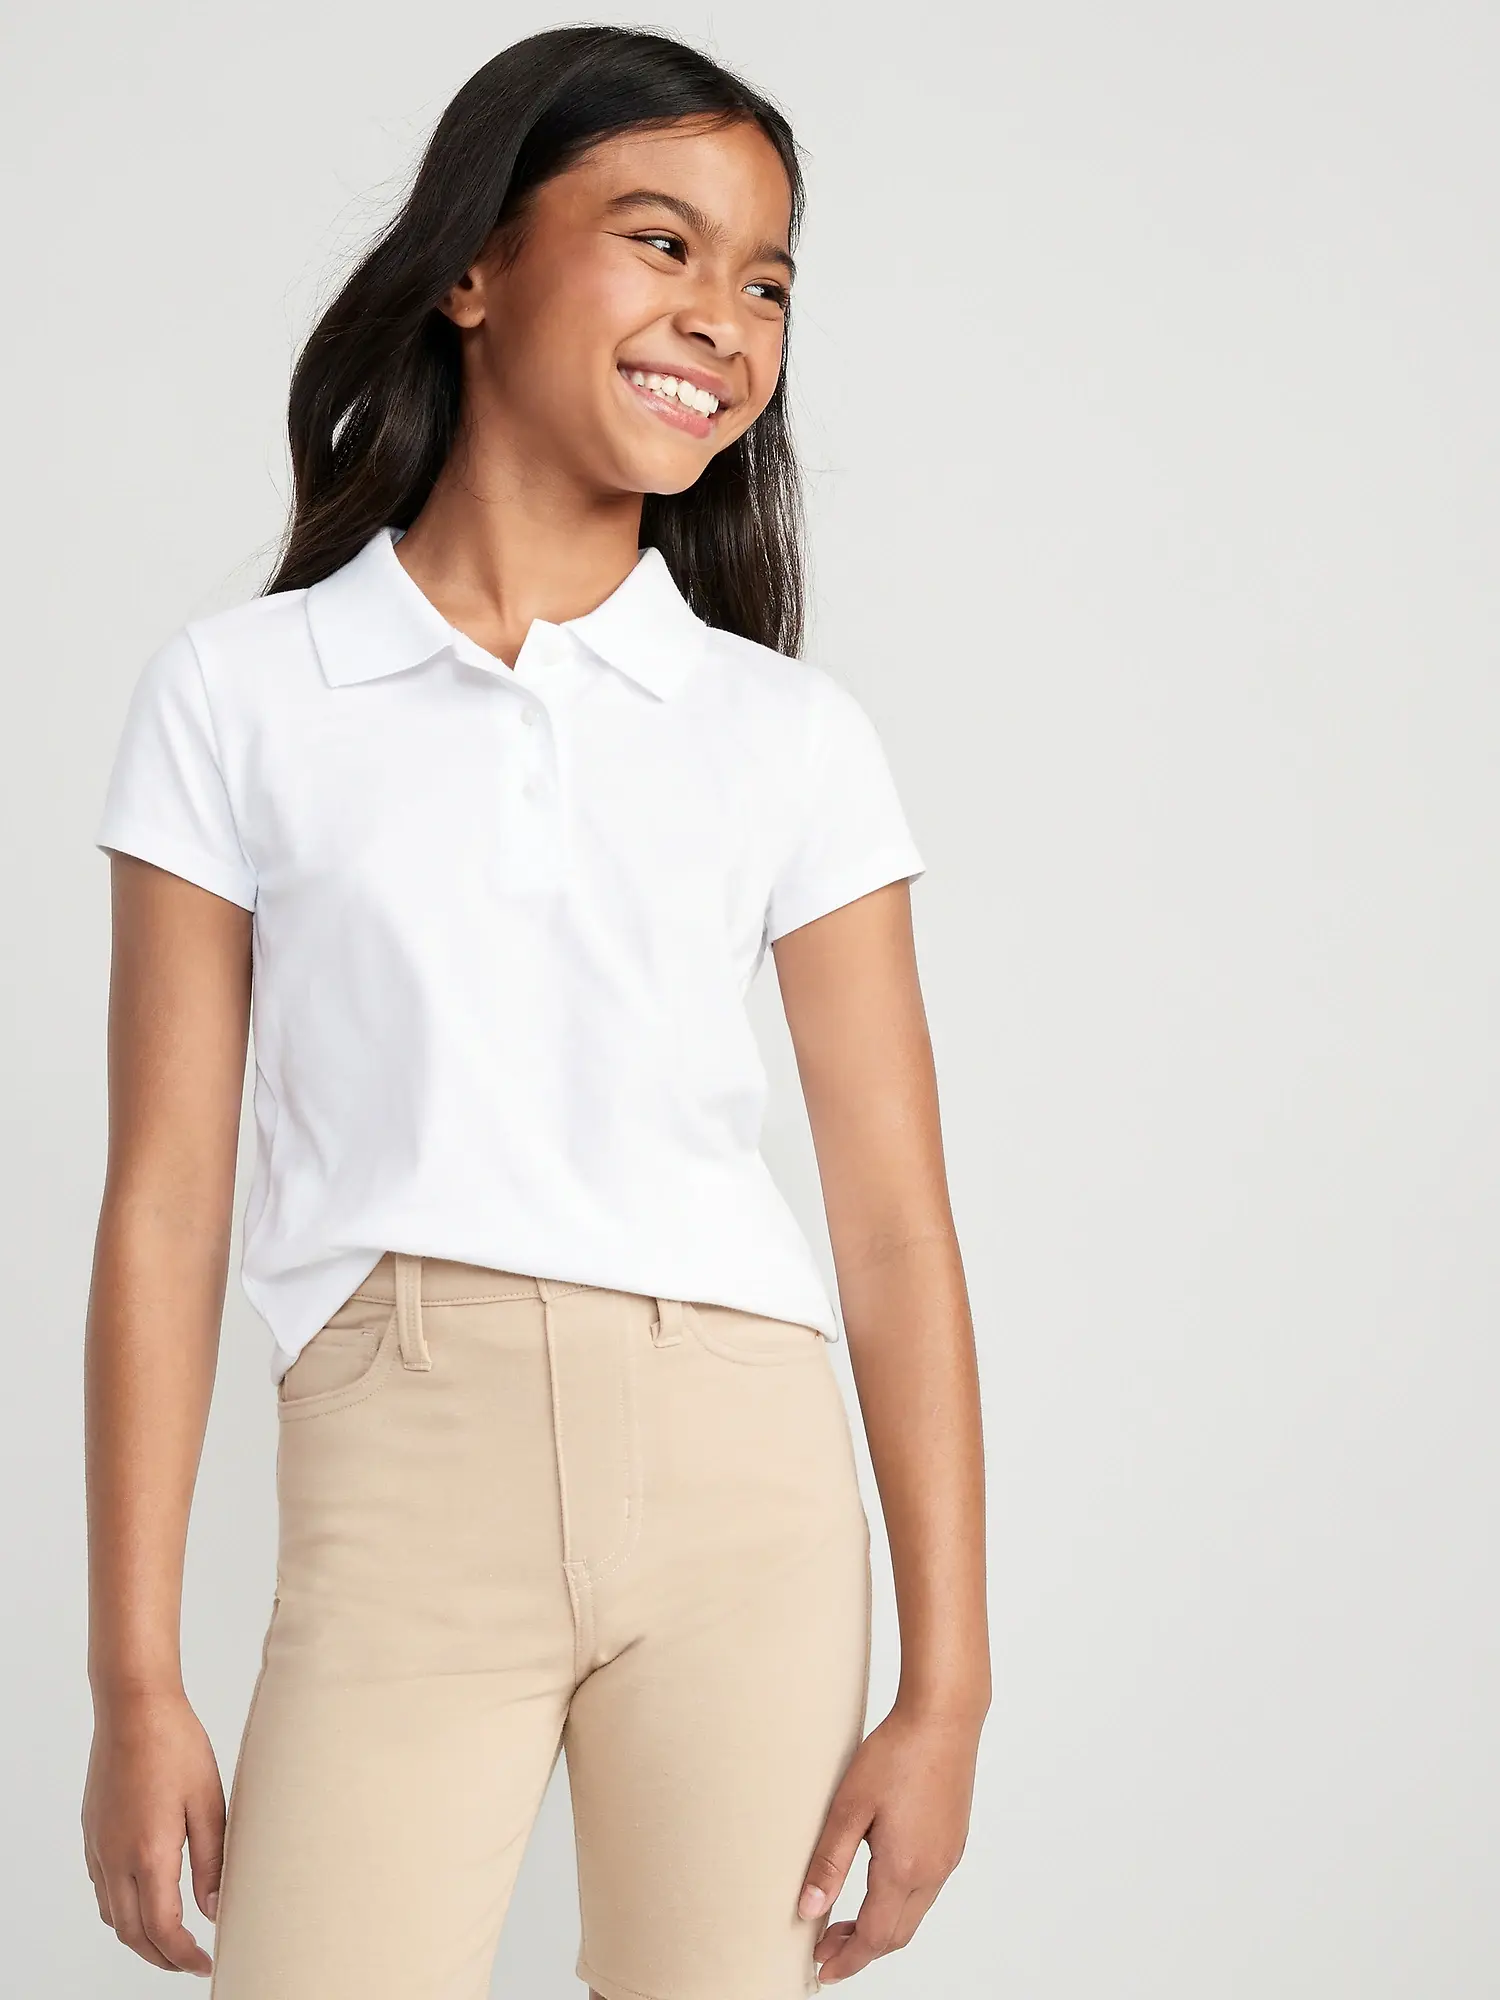 Old Navy School Uniform Polo Shirt for Girls white - 658189002